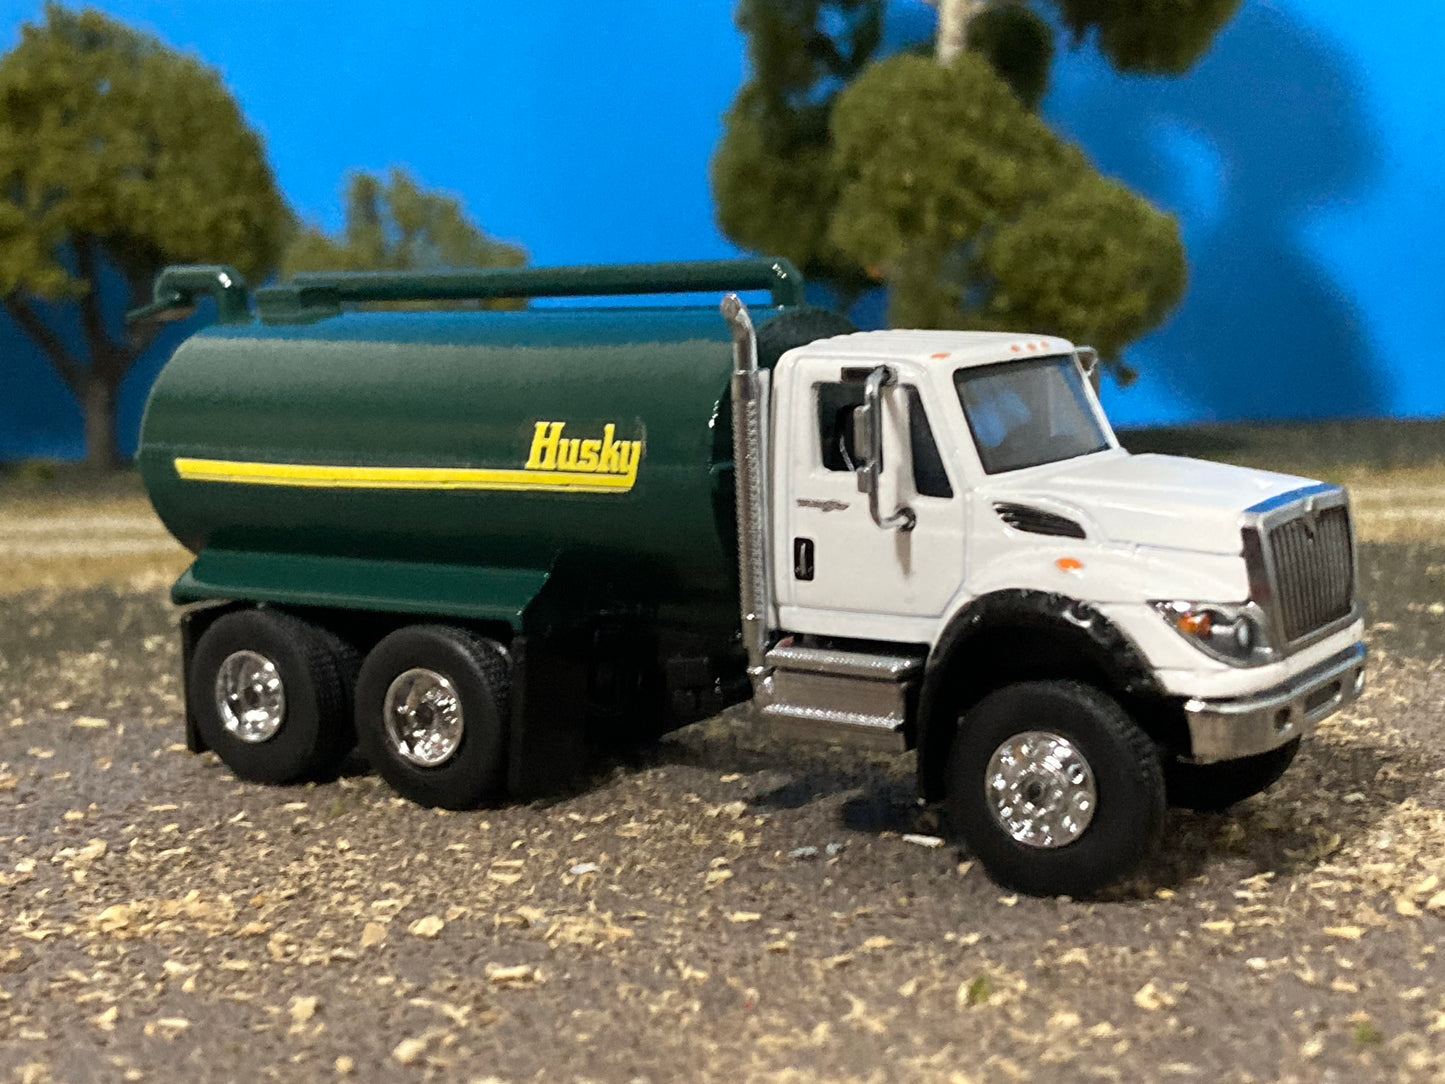 1/64 Husky Manure Spreader on IH WorkStar Truck 4,000 gallon